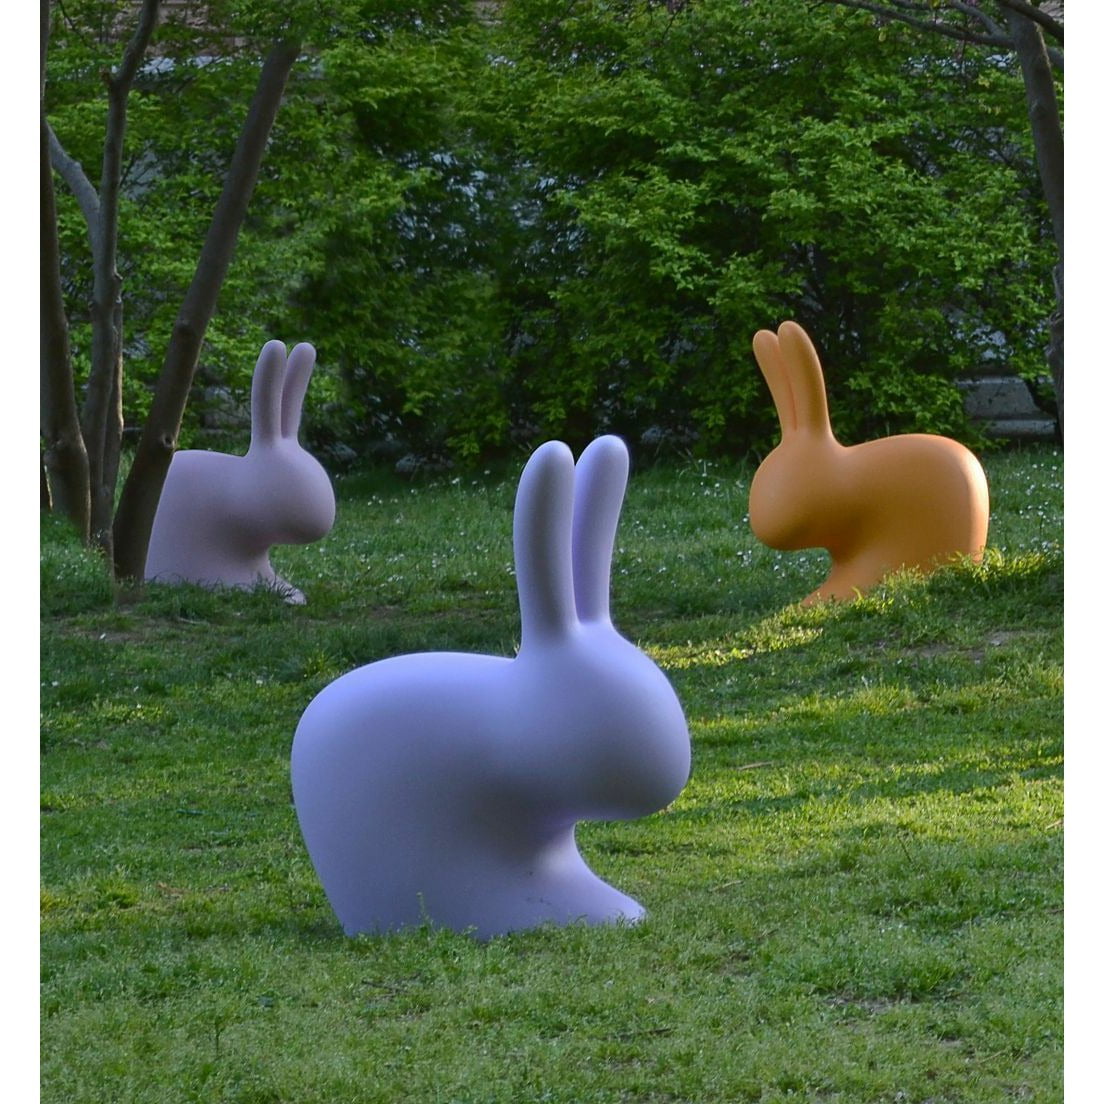 Qeeboo Bunny stol af Stefano Giovannoni, Light Orange